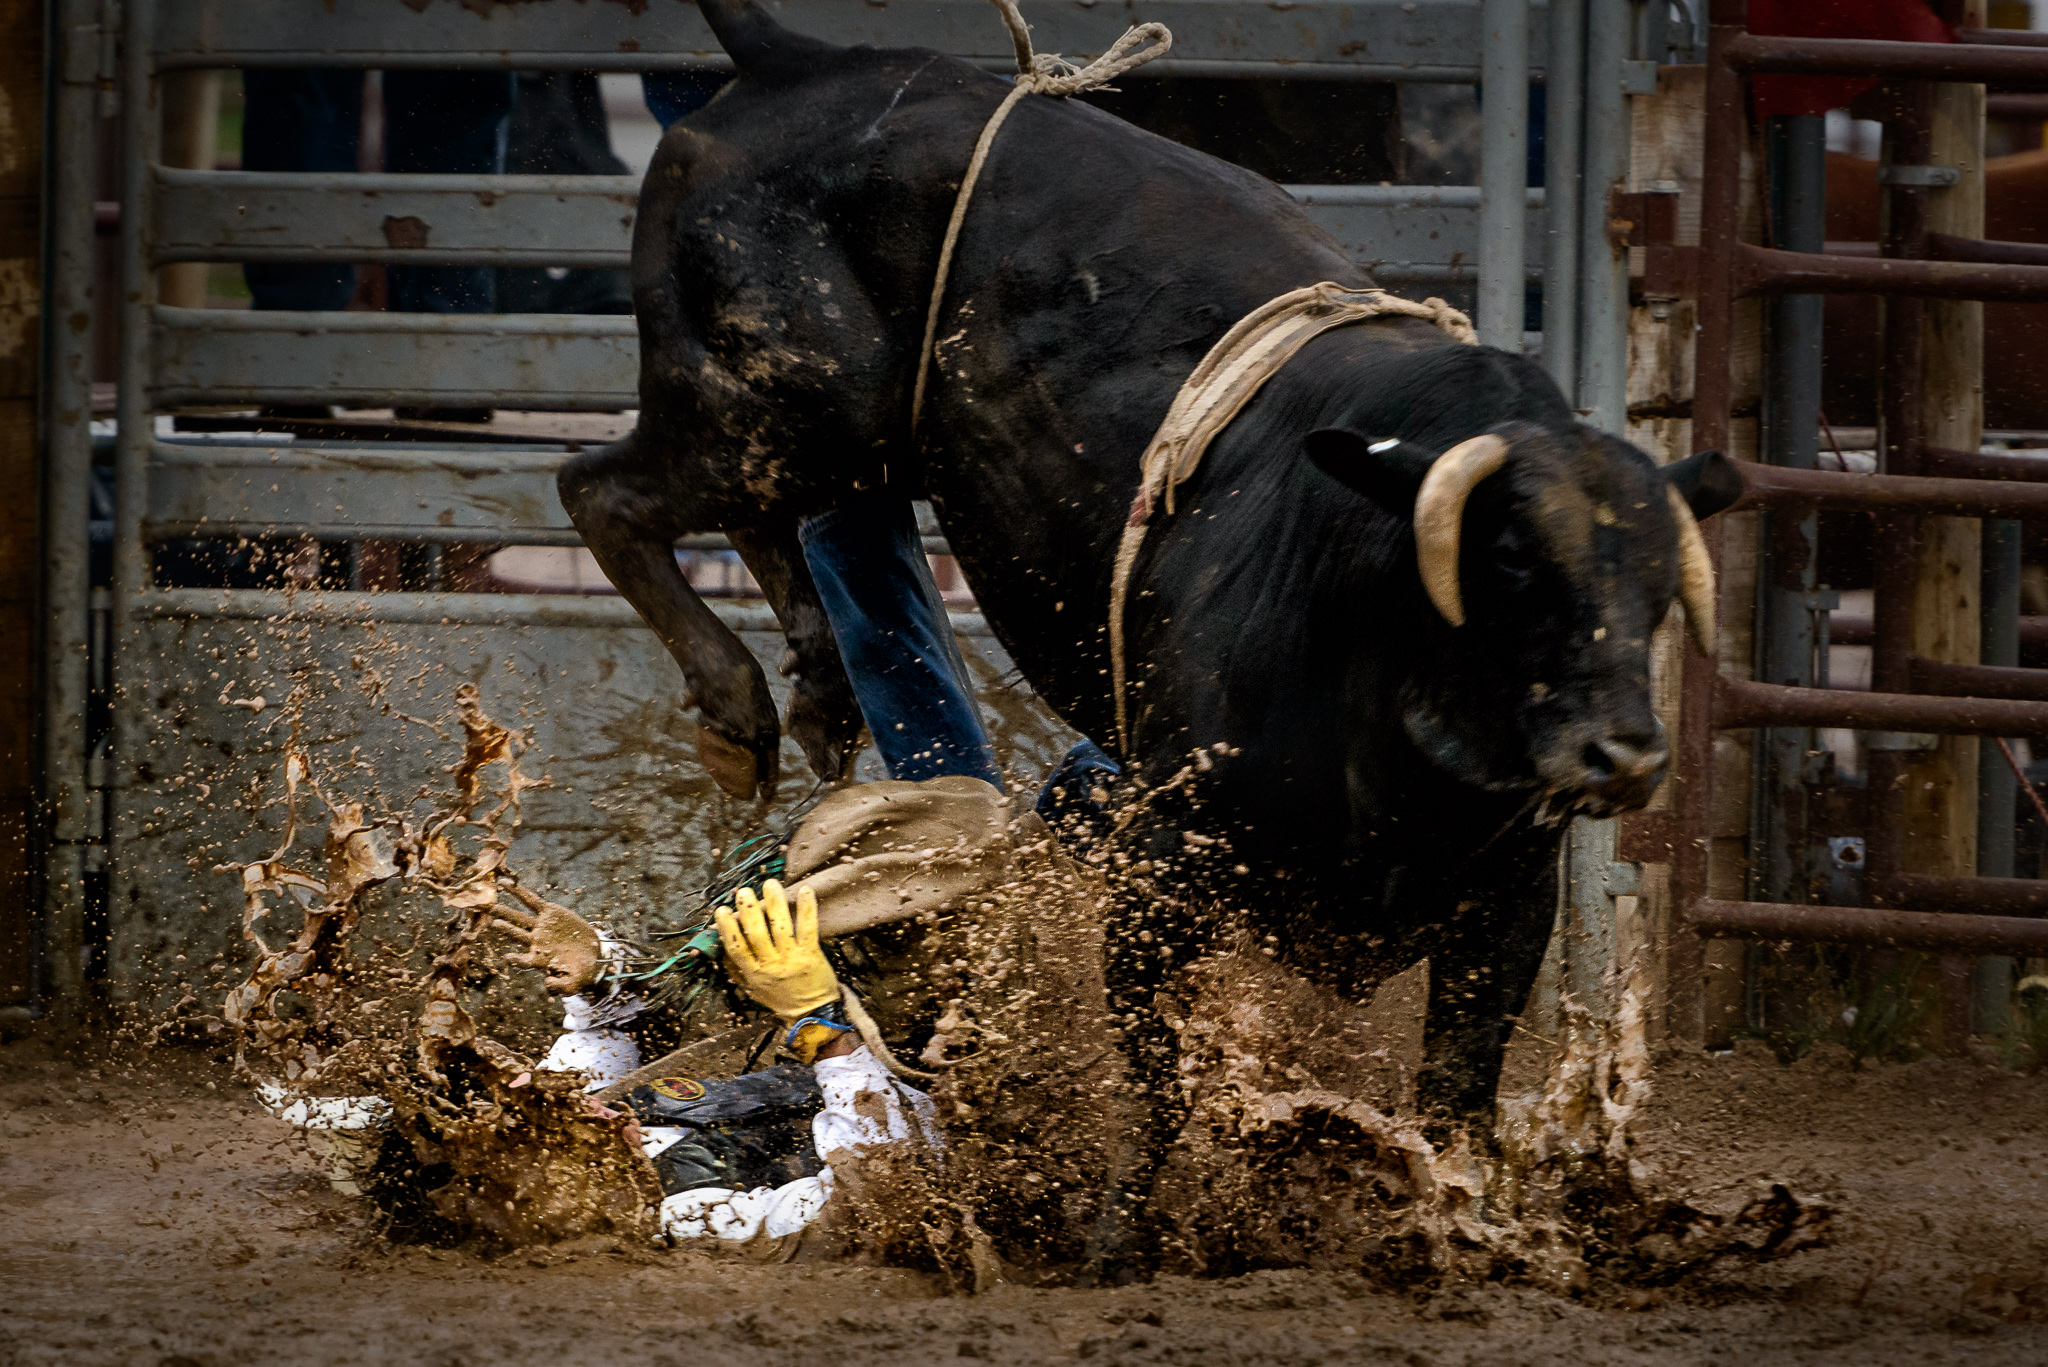 George Hendrix captures Bull Rider in Mud